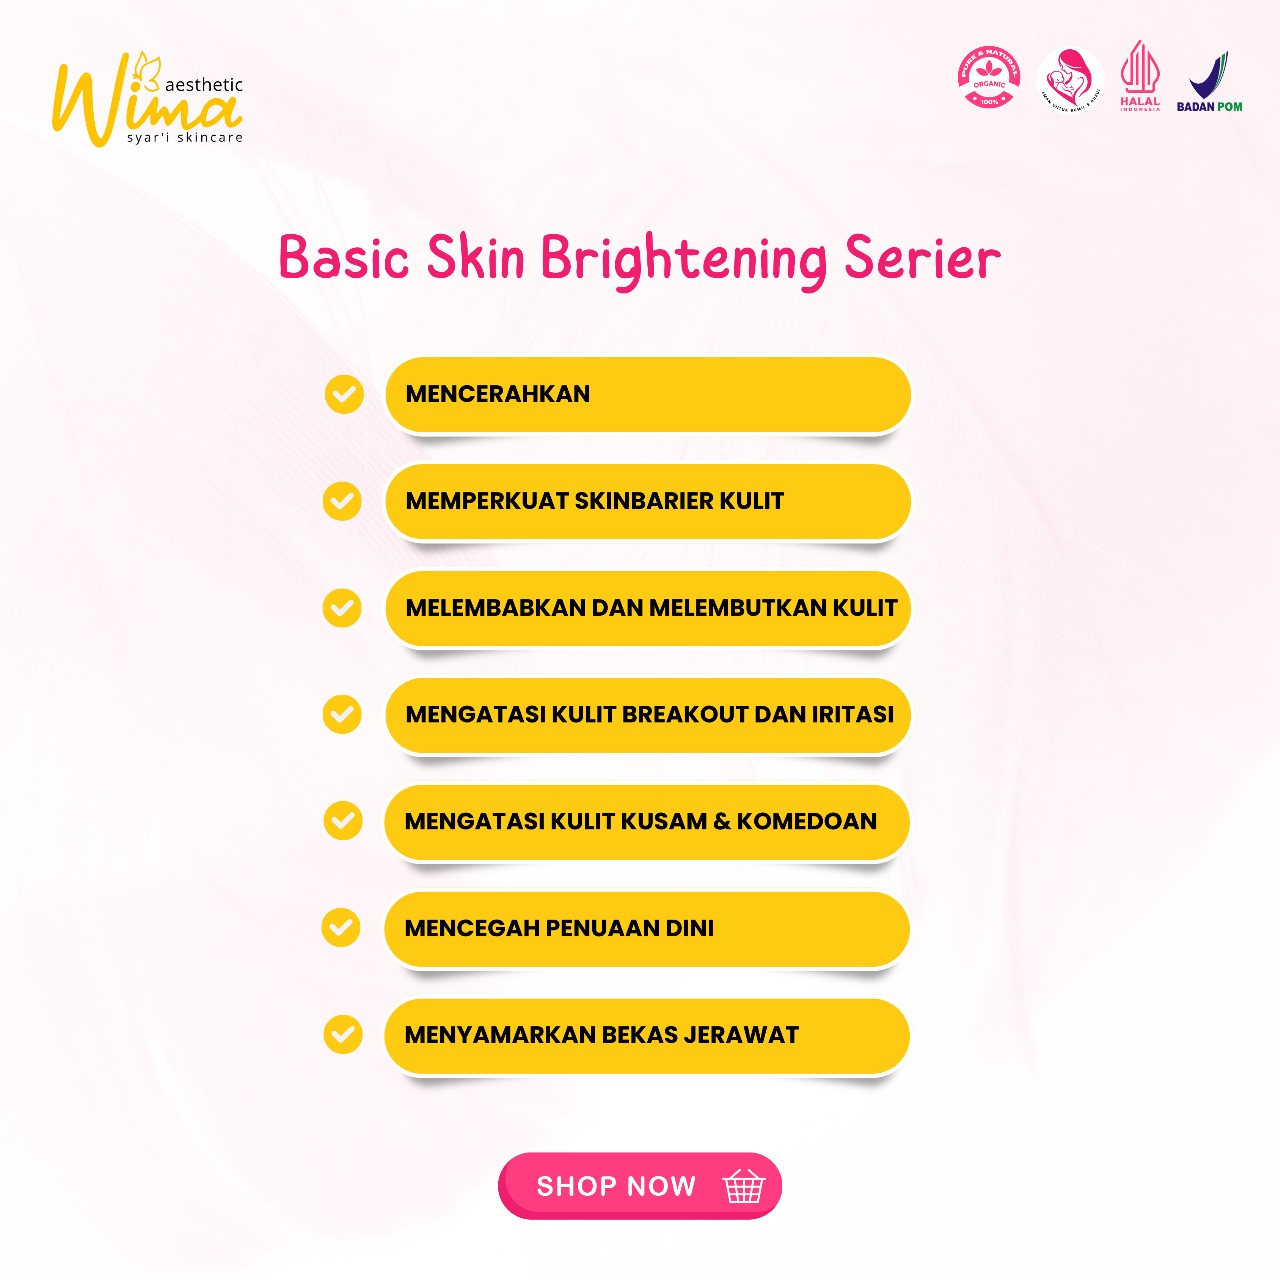 Basic Skin Brightening Series